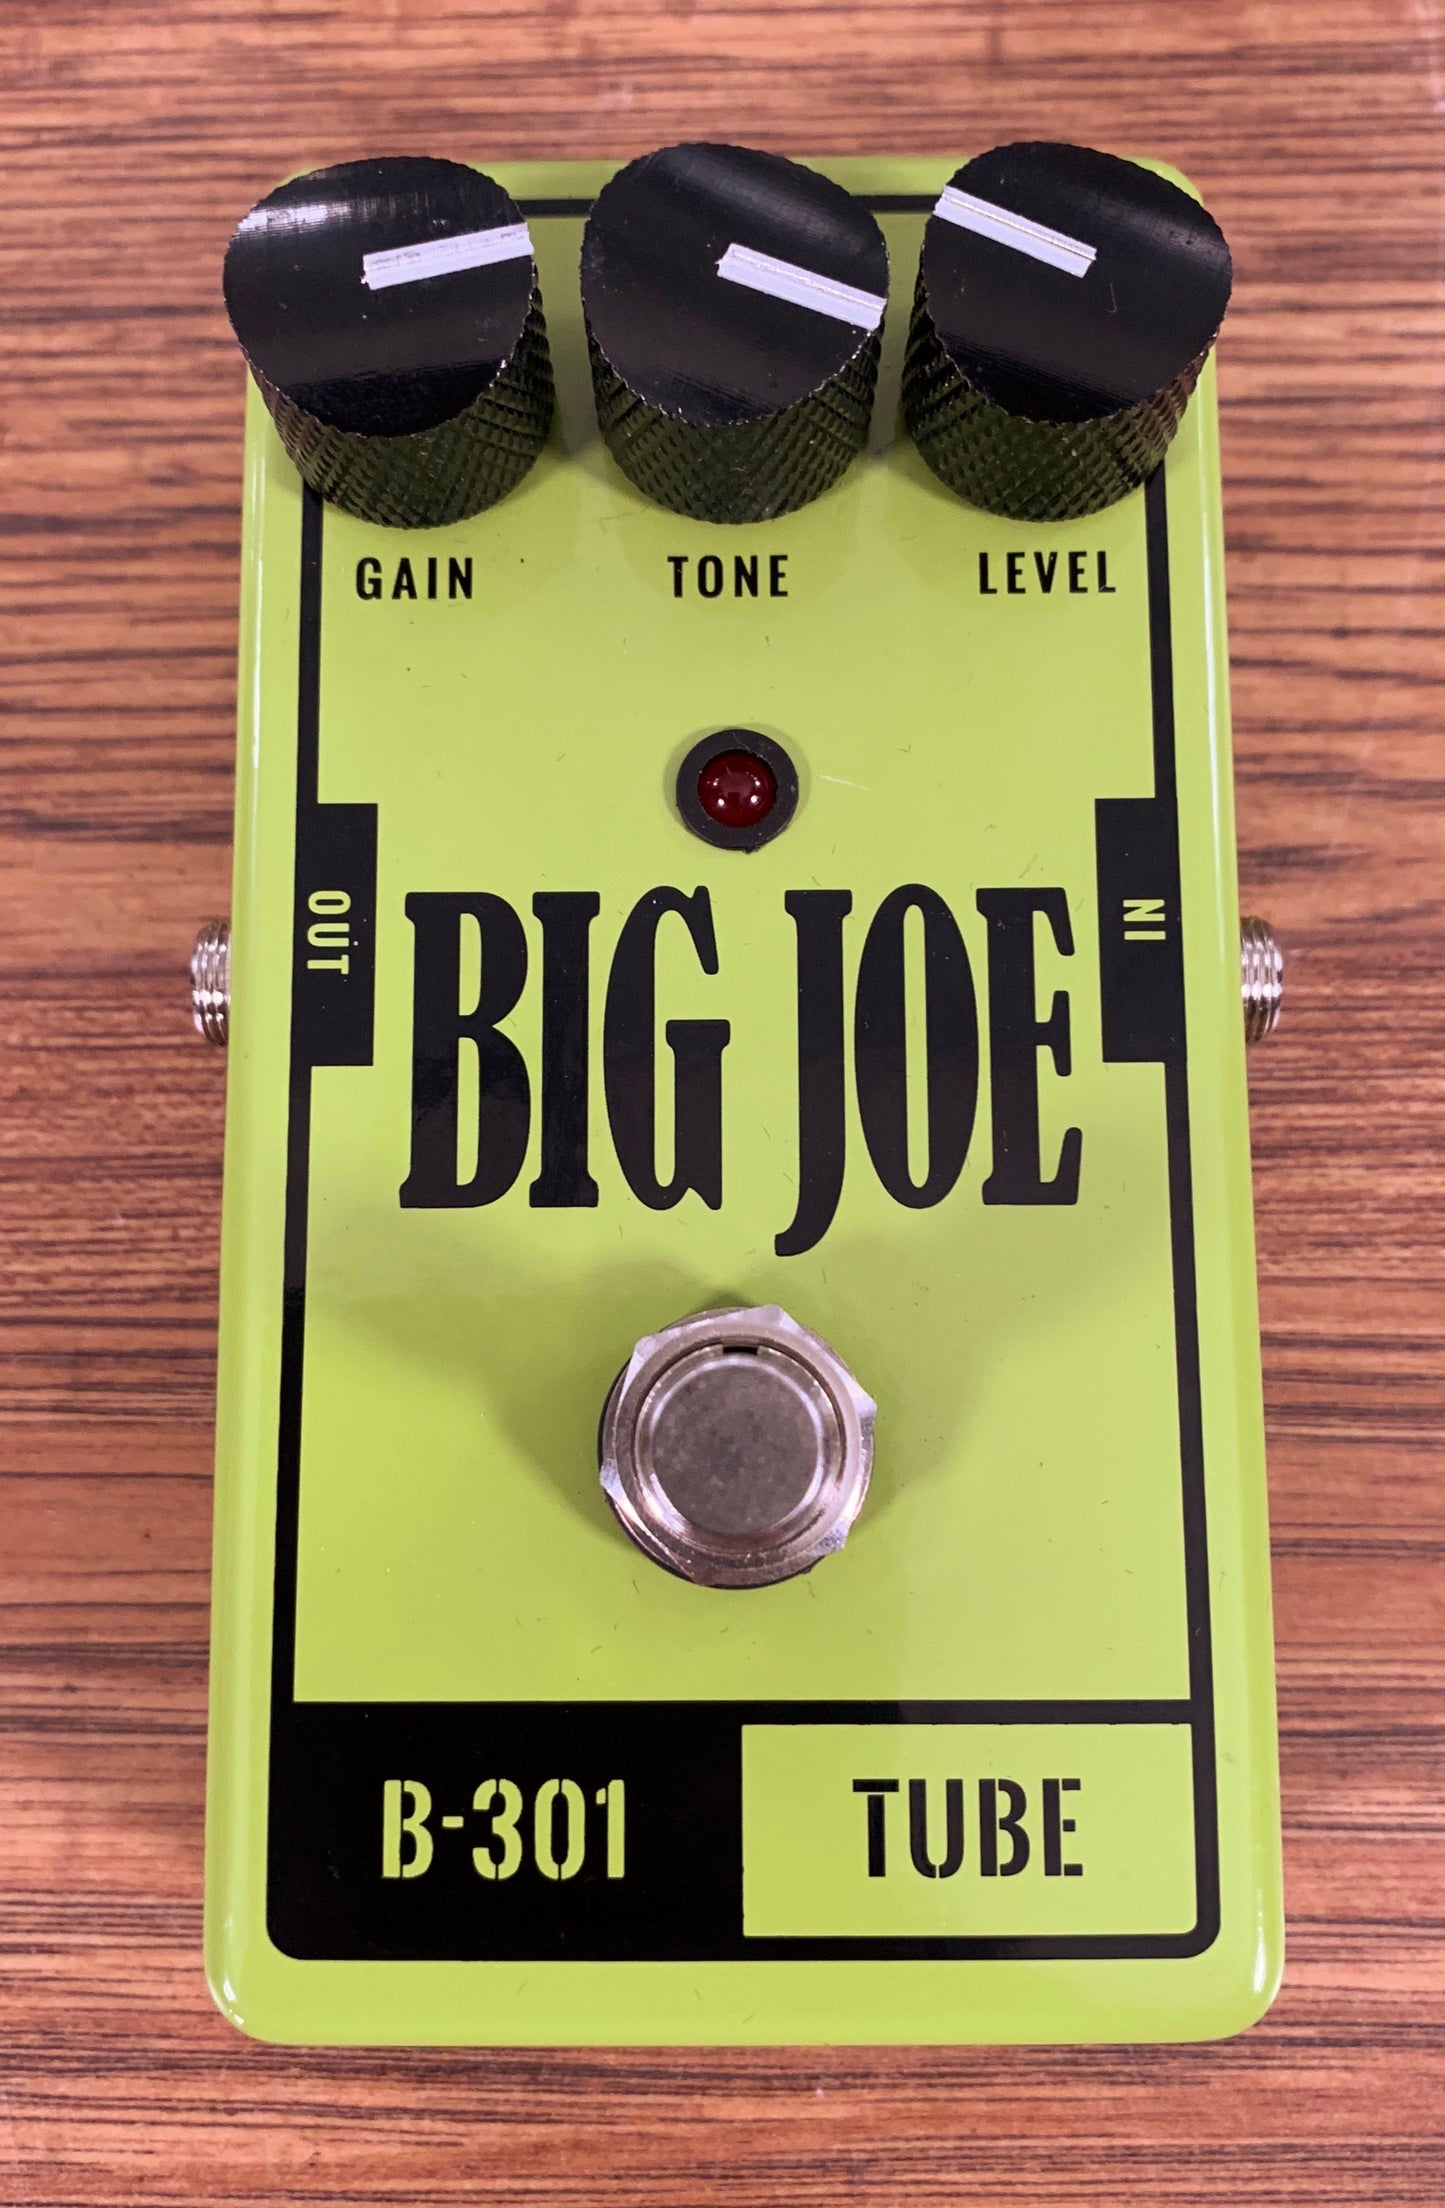 Big Joe Stomp Box Analog Tube B-301 Big Joe Series Overdrive Guitar Effects Pedal